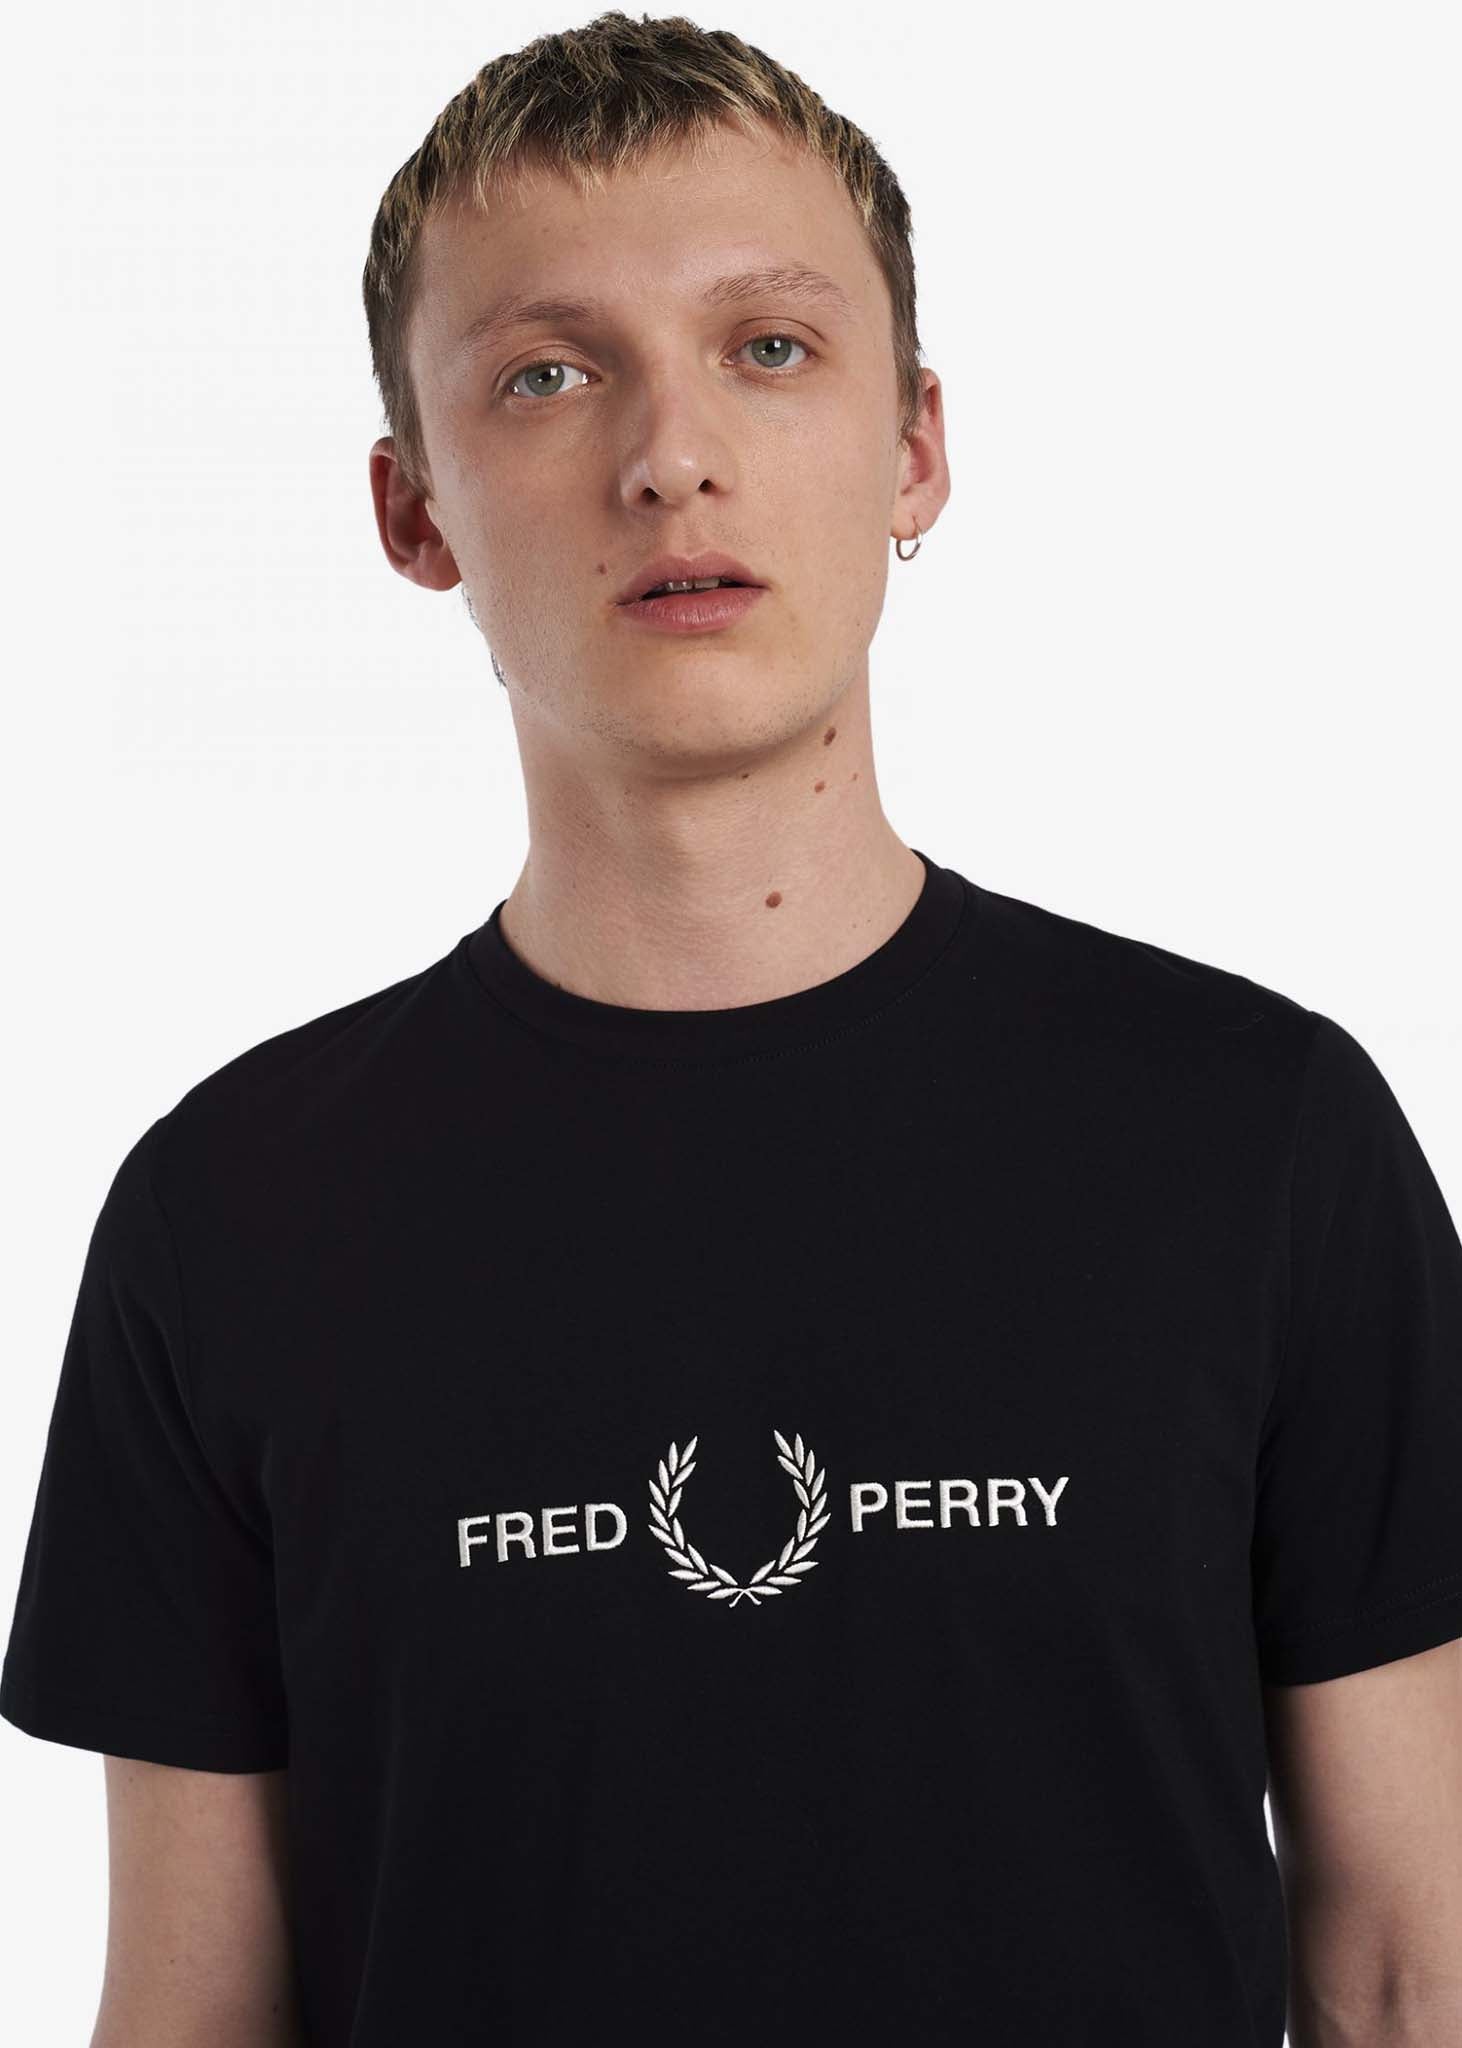 Fred Perry t-shirt black zwart